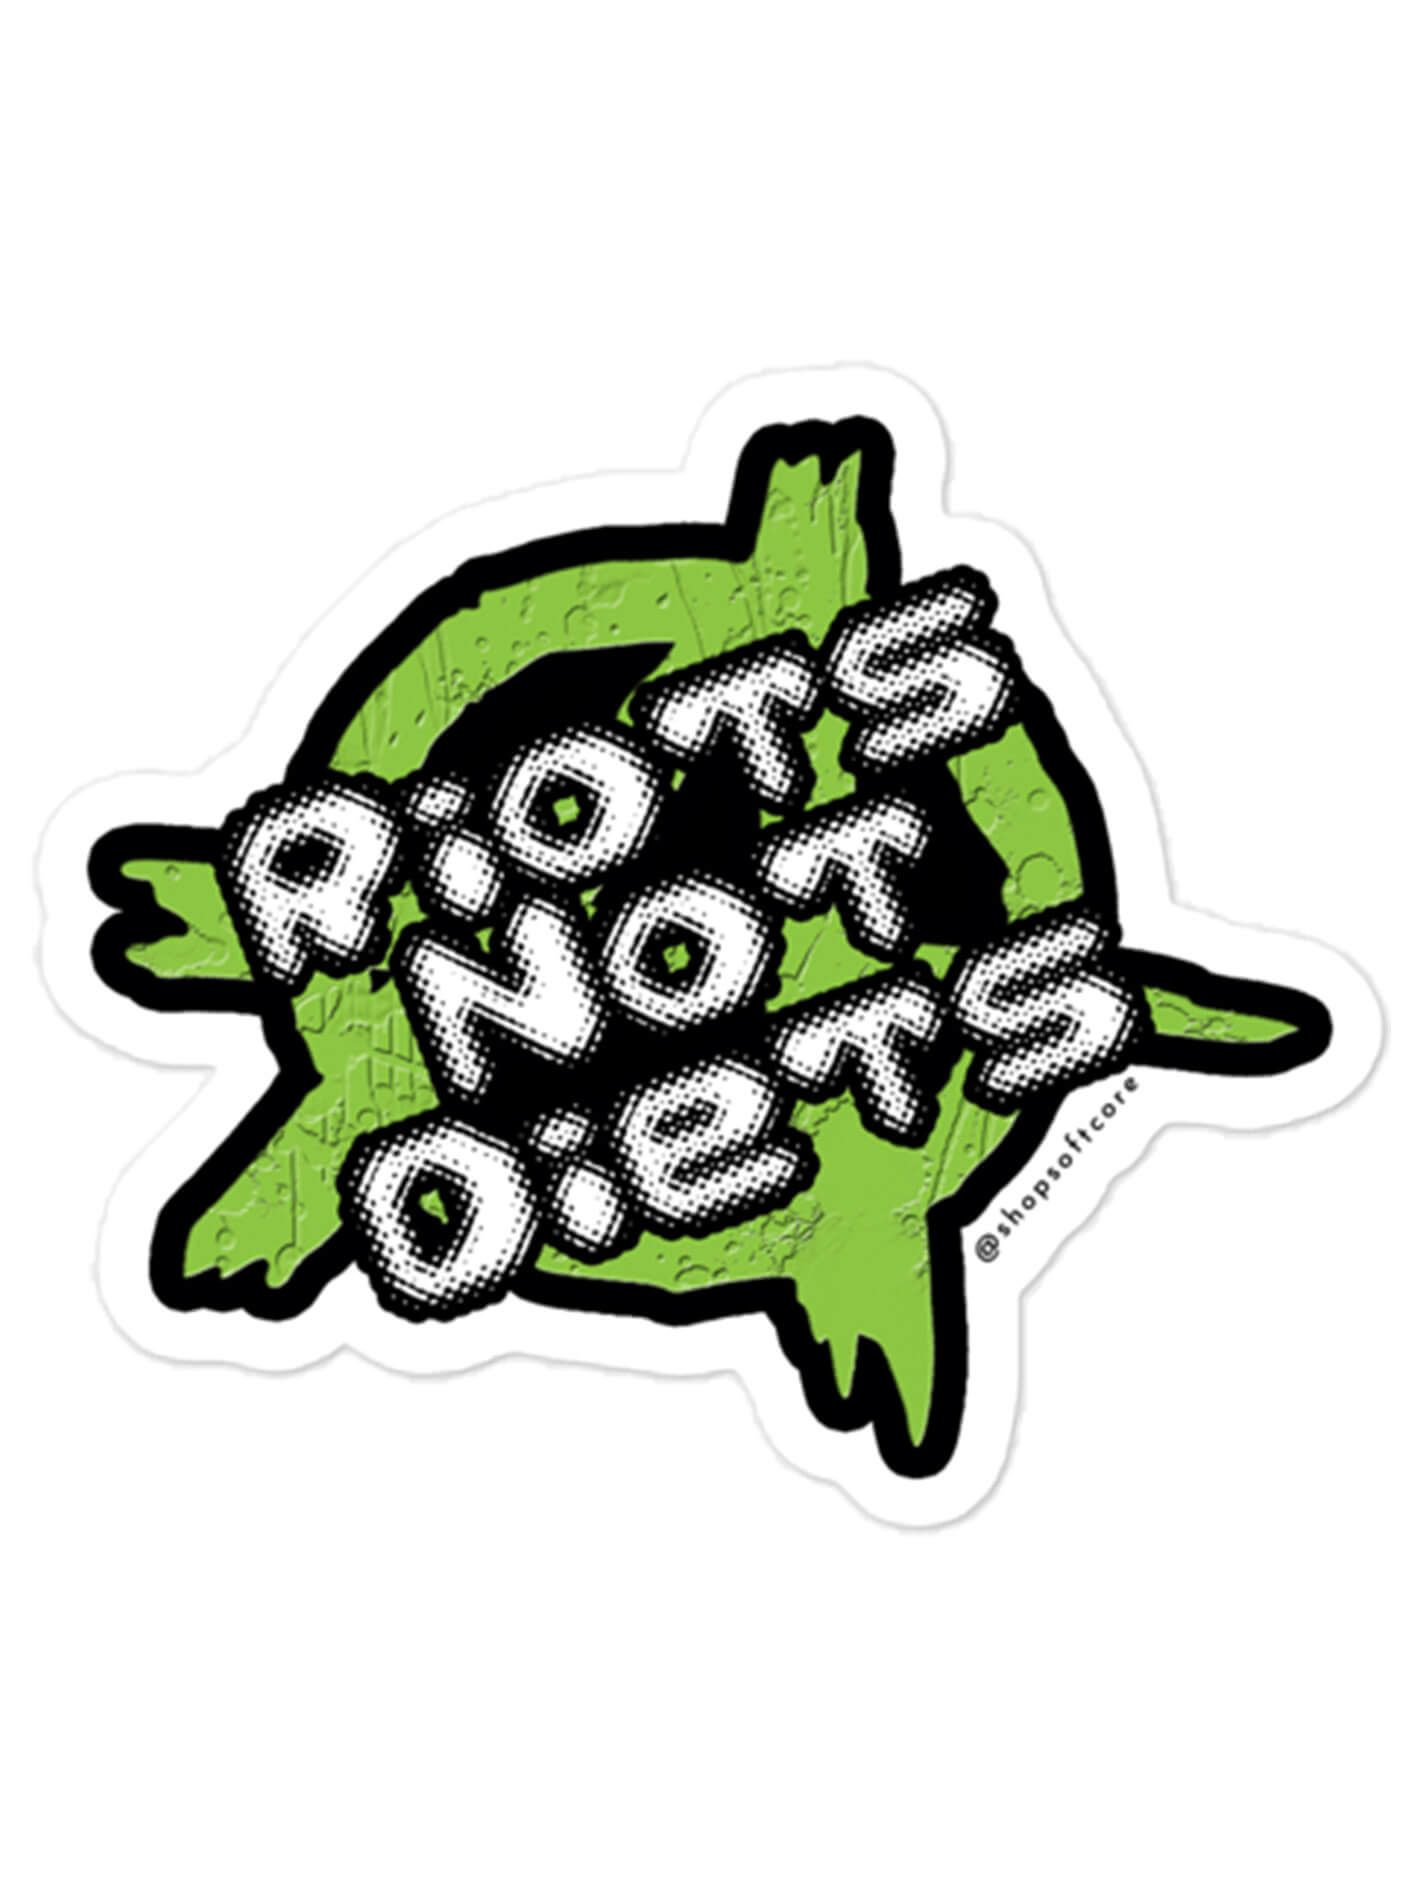 Riots not diets sticker.